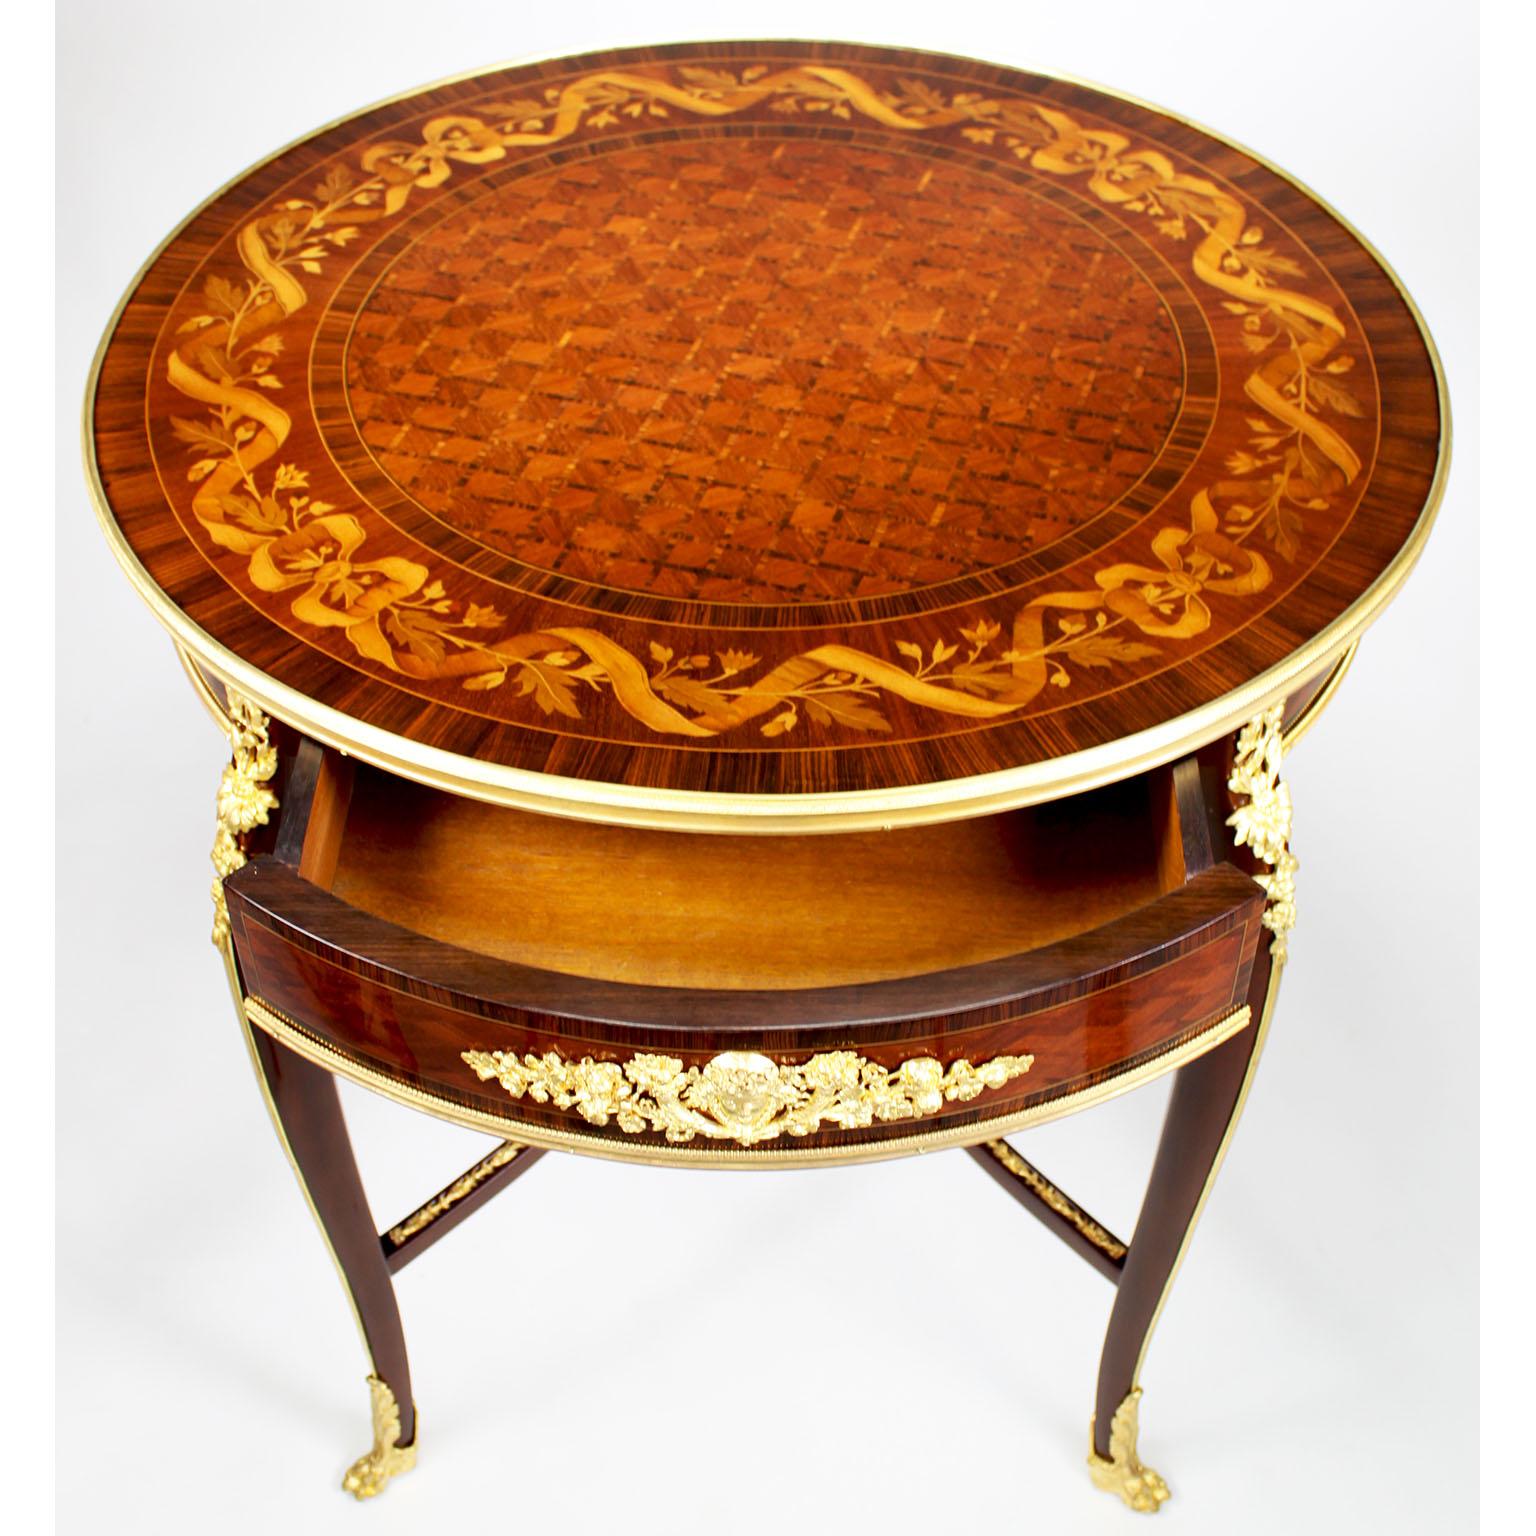 French 19th-20th Century Circular Marquetry & Ormolu Table, Attr. François Linke For Sale 3